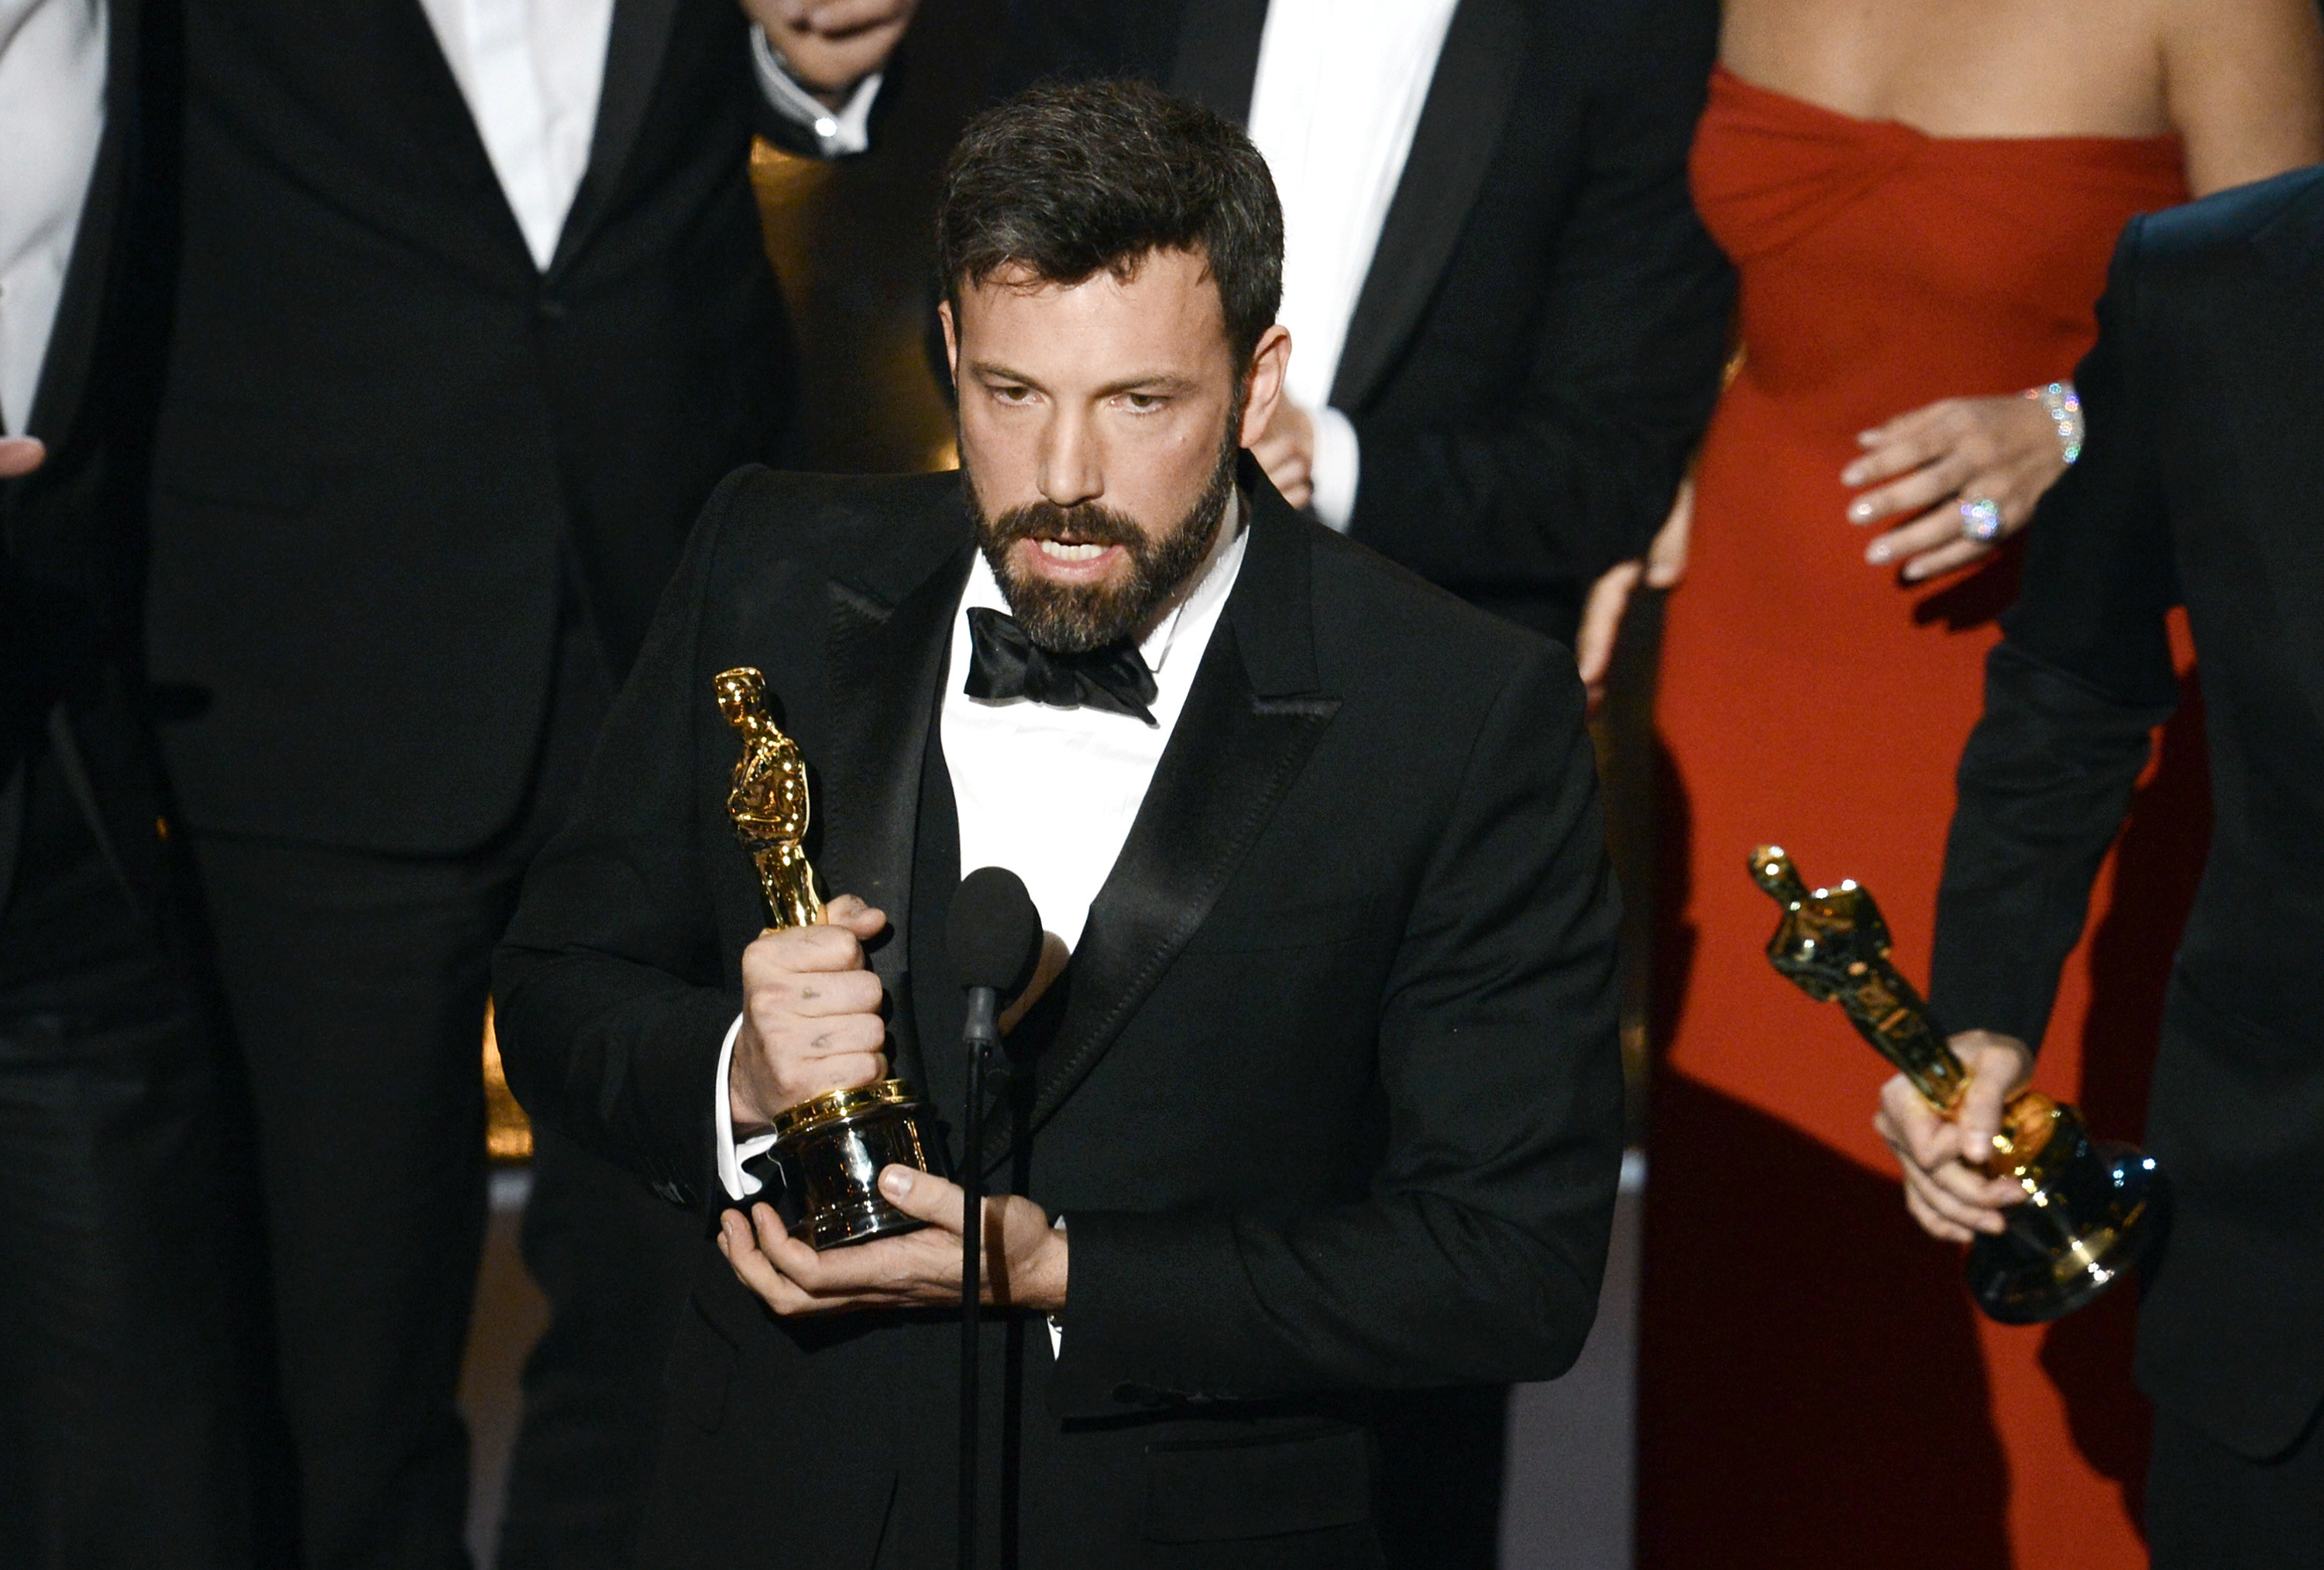 Ben holding an Oscar at a podium